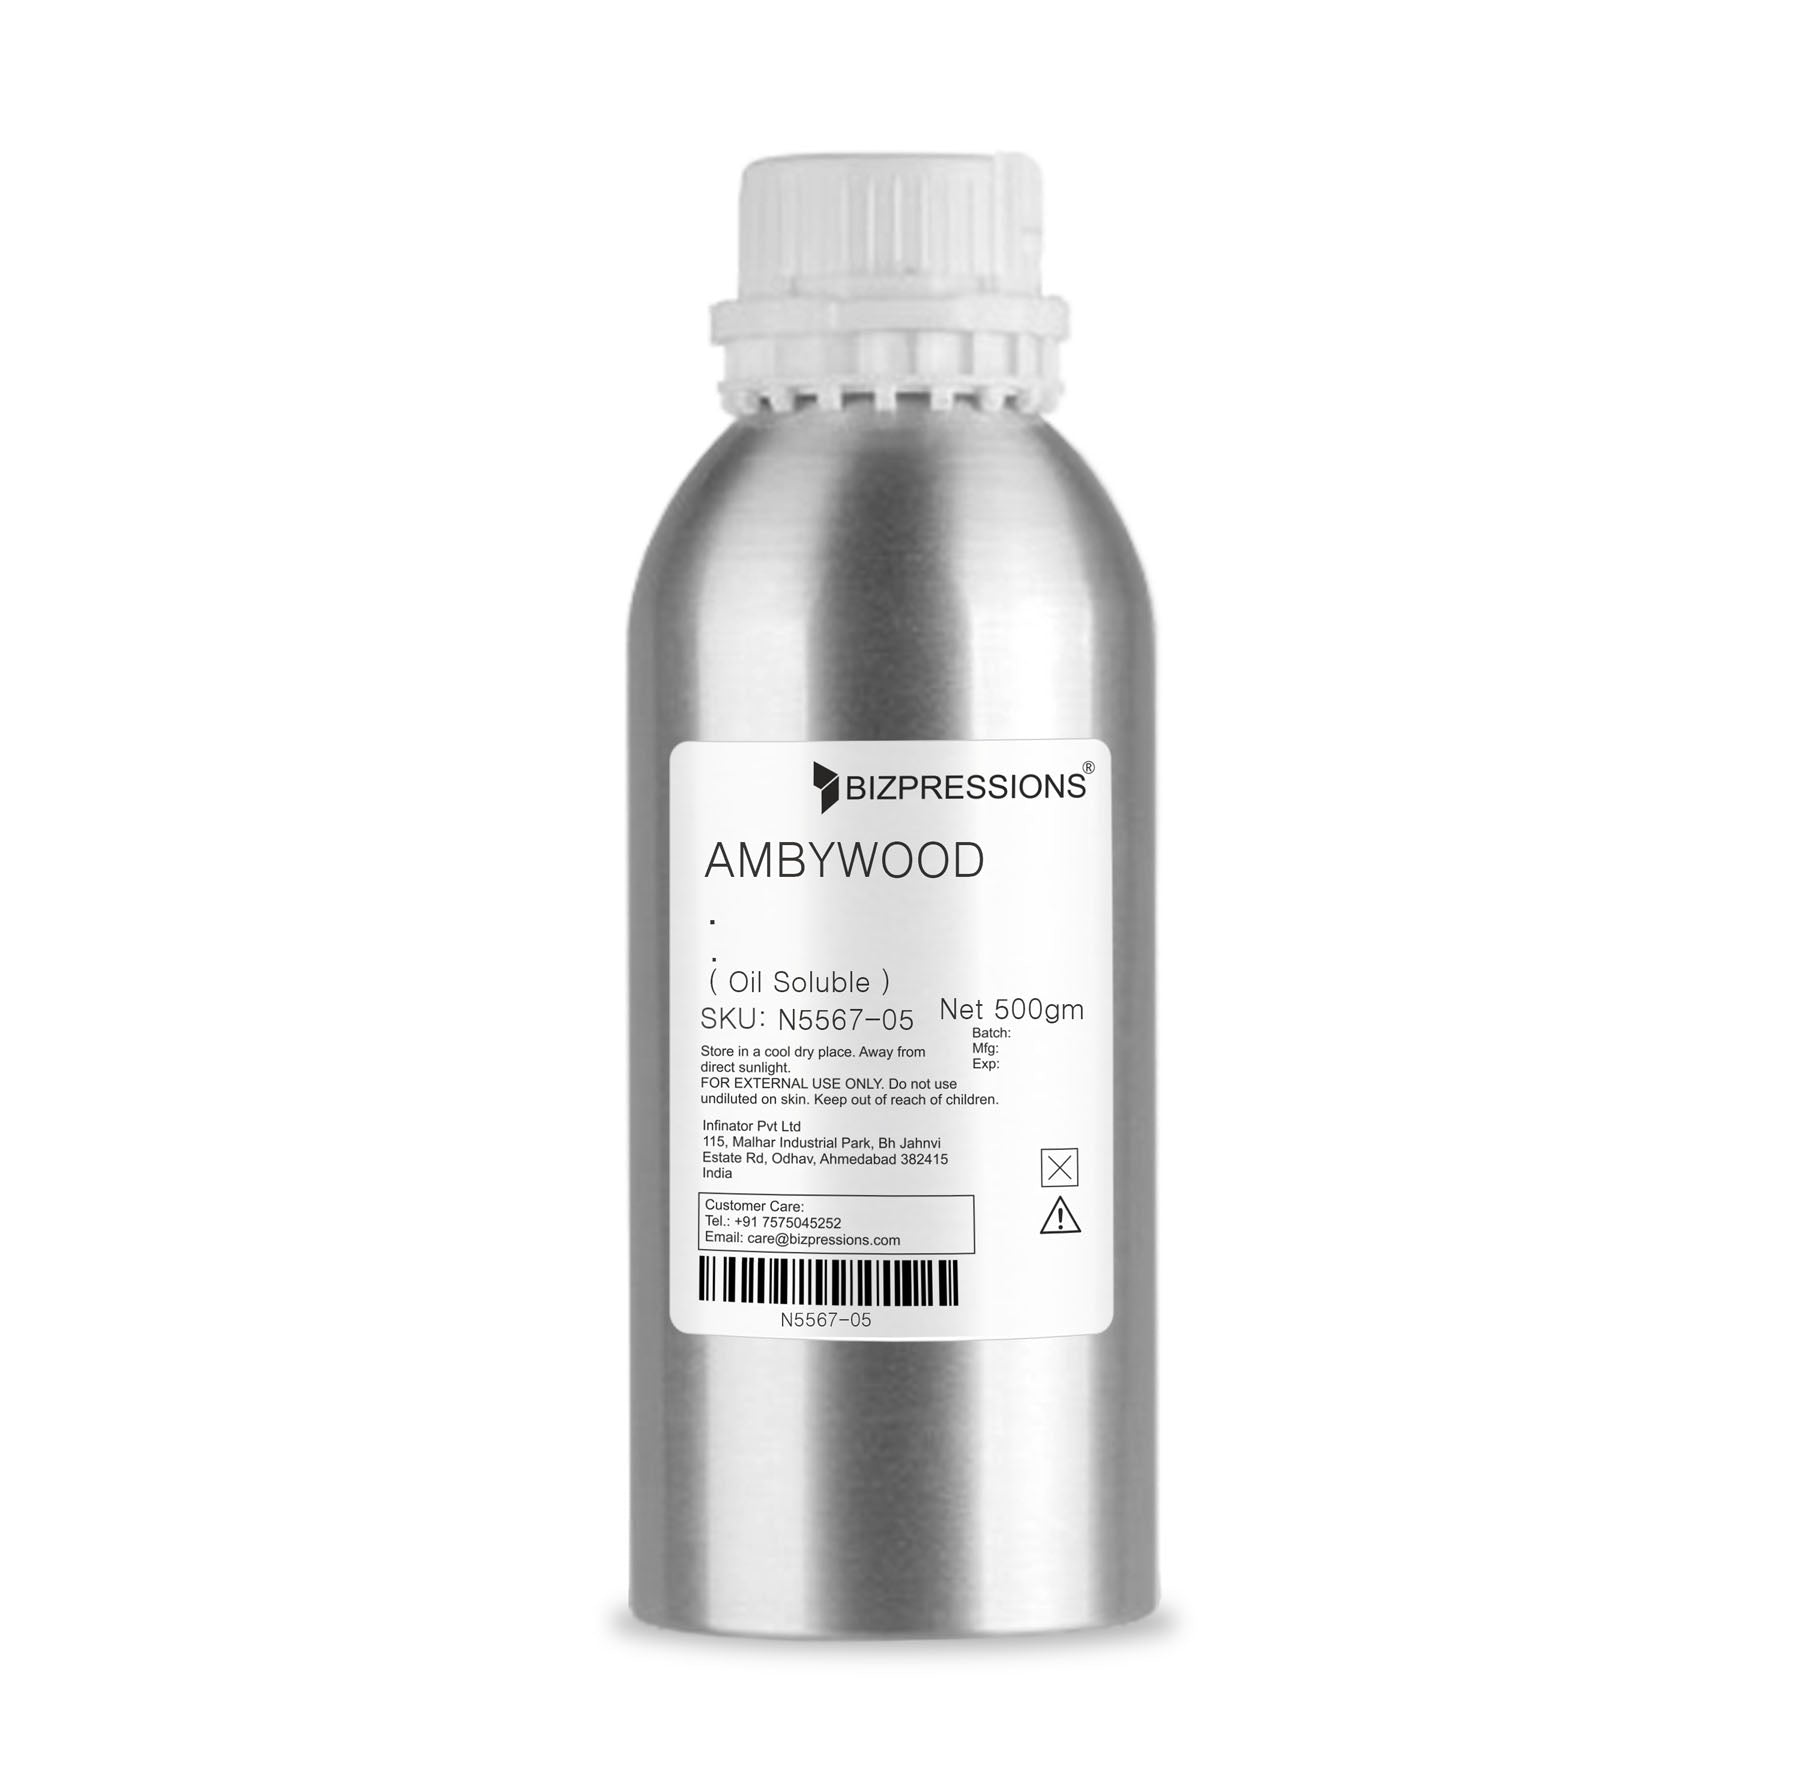 AMBYWOOD - Fragrance ( Oil Soluble ) - 500 gm